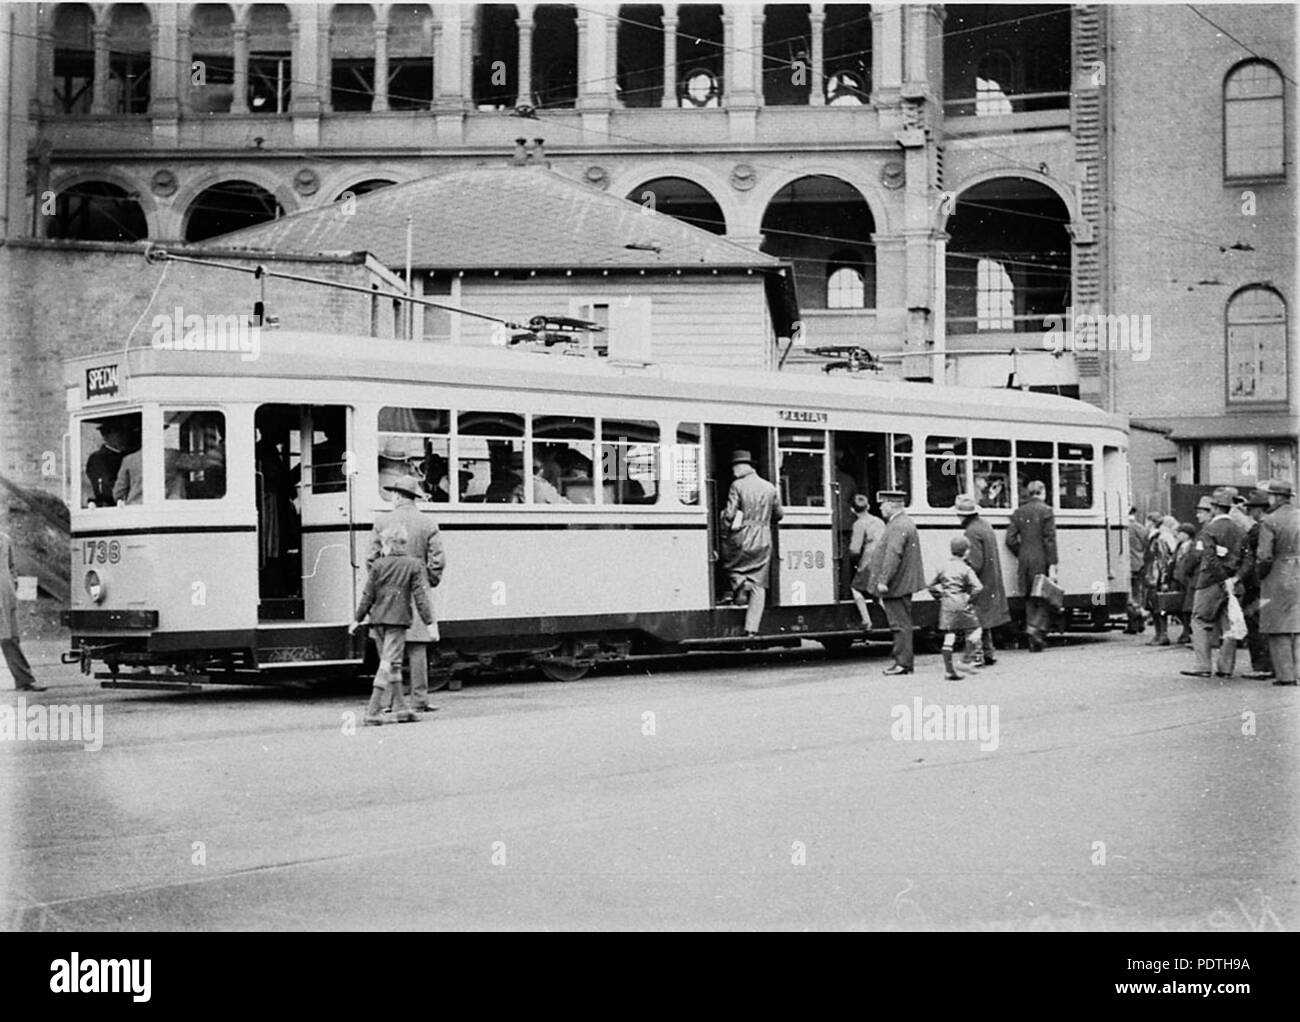 169 51773 SLNSW Sydney tram n. 1738 ultimo modello Foto Stock